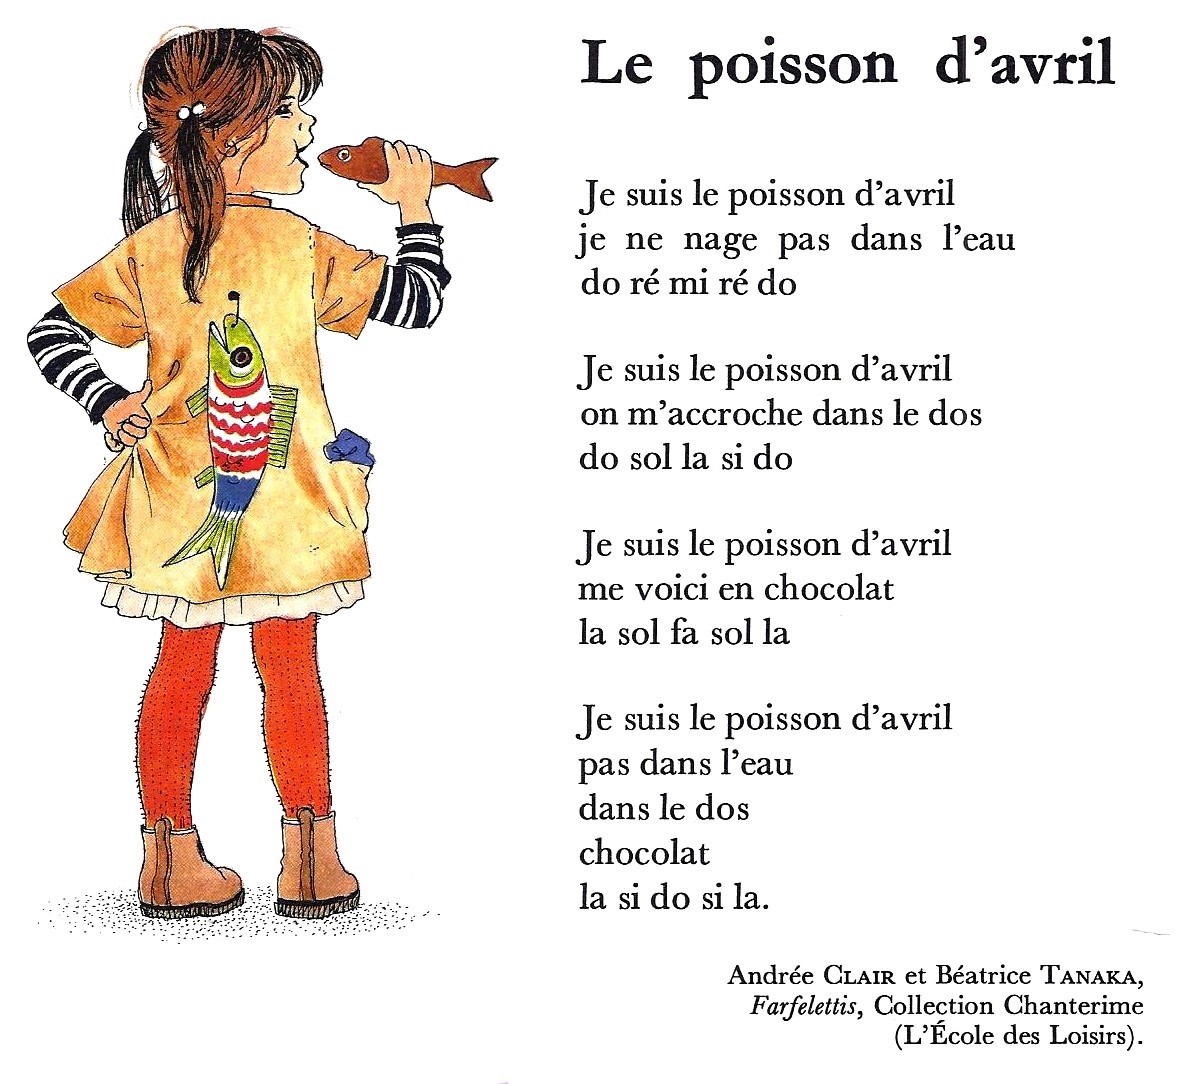 Ce n est pas que. Стихотворение на французском языке. Стихи на французском языке для детей. Детские стихотворения на французском. Стишки на французском для детей.